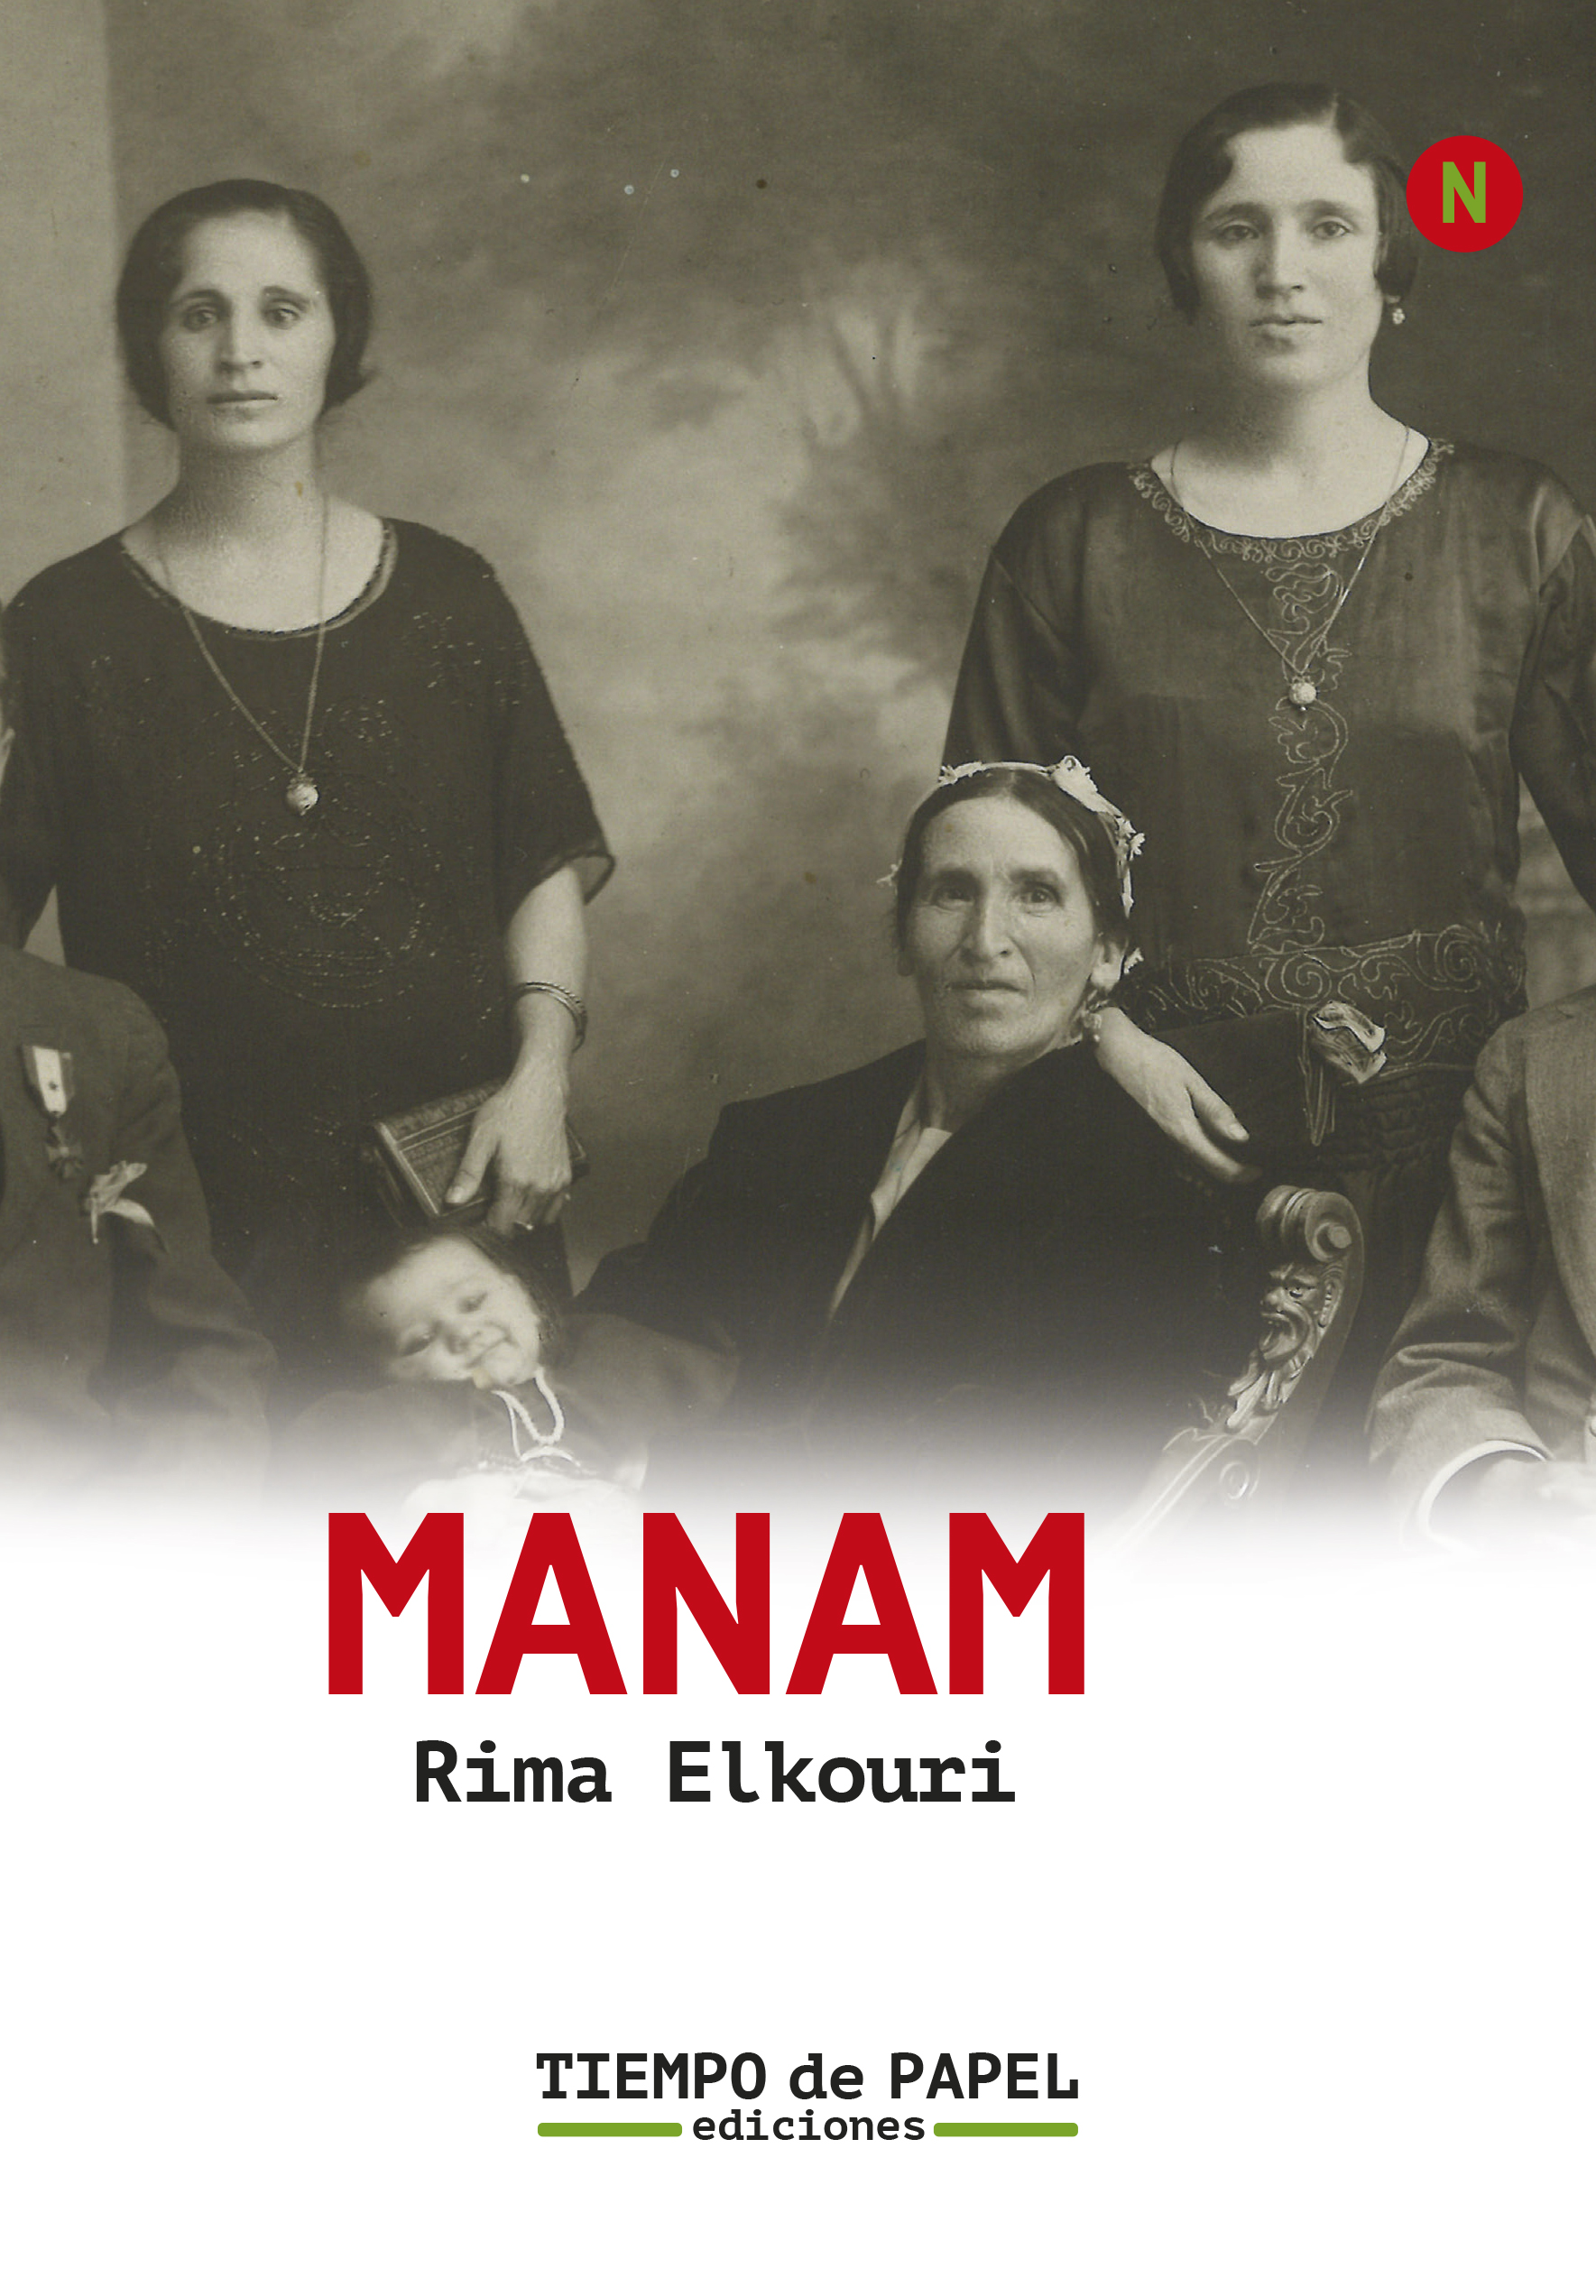 Portada de 'Manam', de Rima Elkouri.